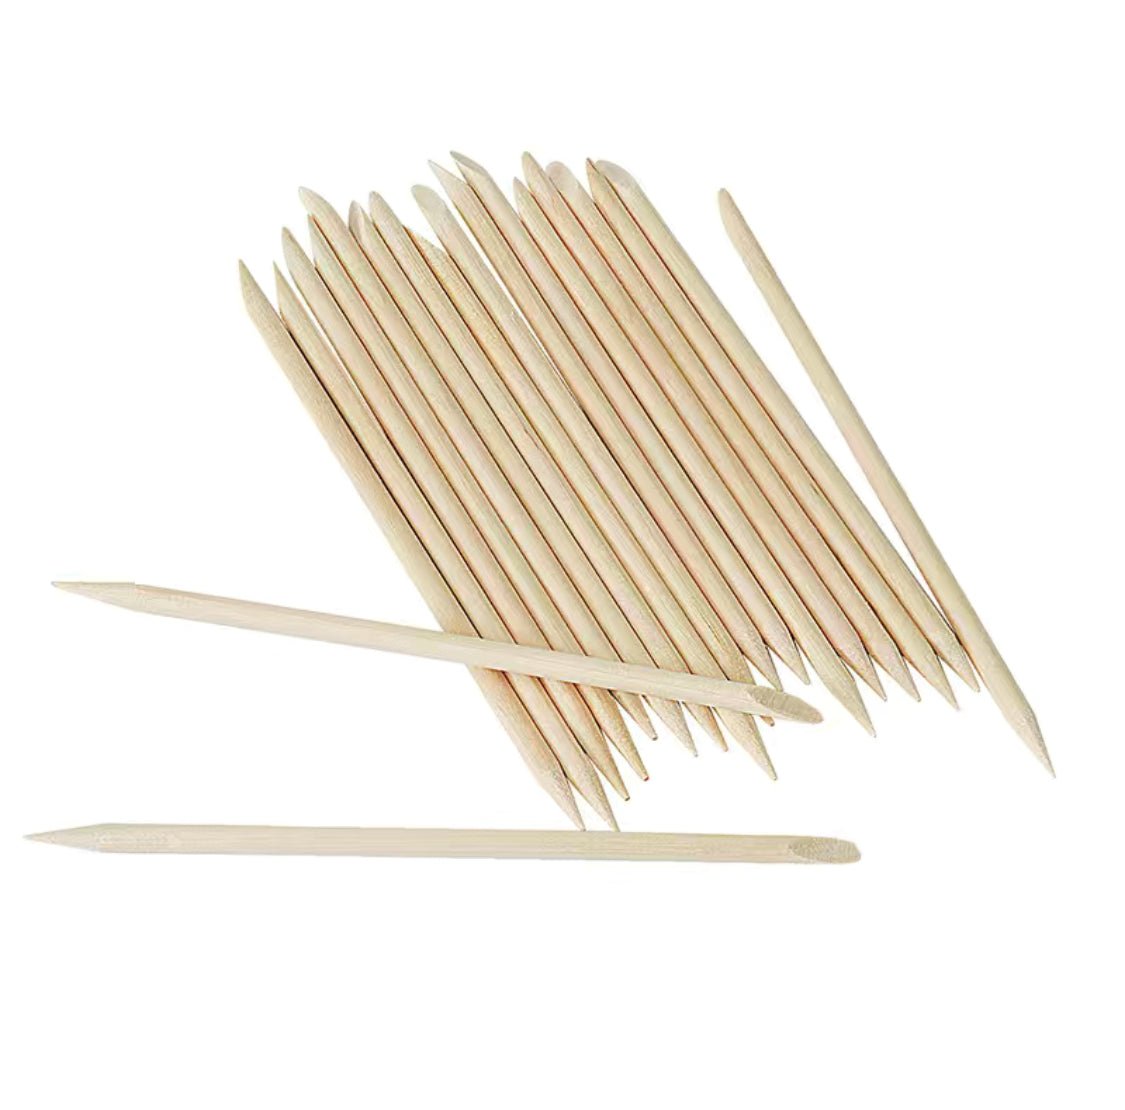 Orange Wood Nail Sticks(Eyebrow Wax Sticks,Waxing Applicator